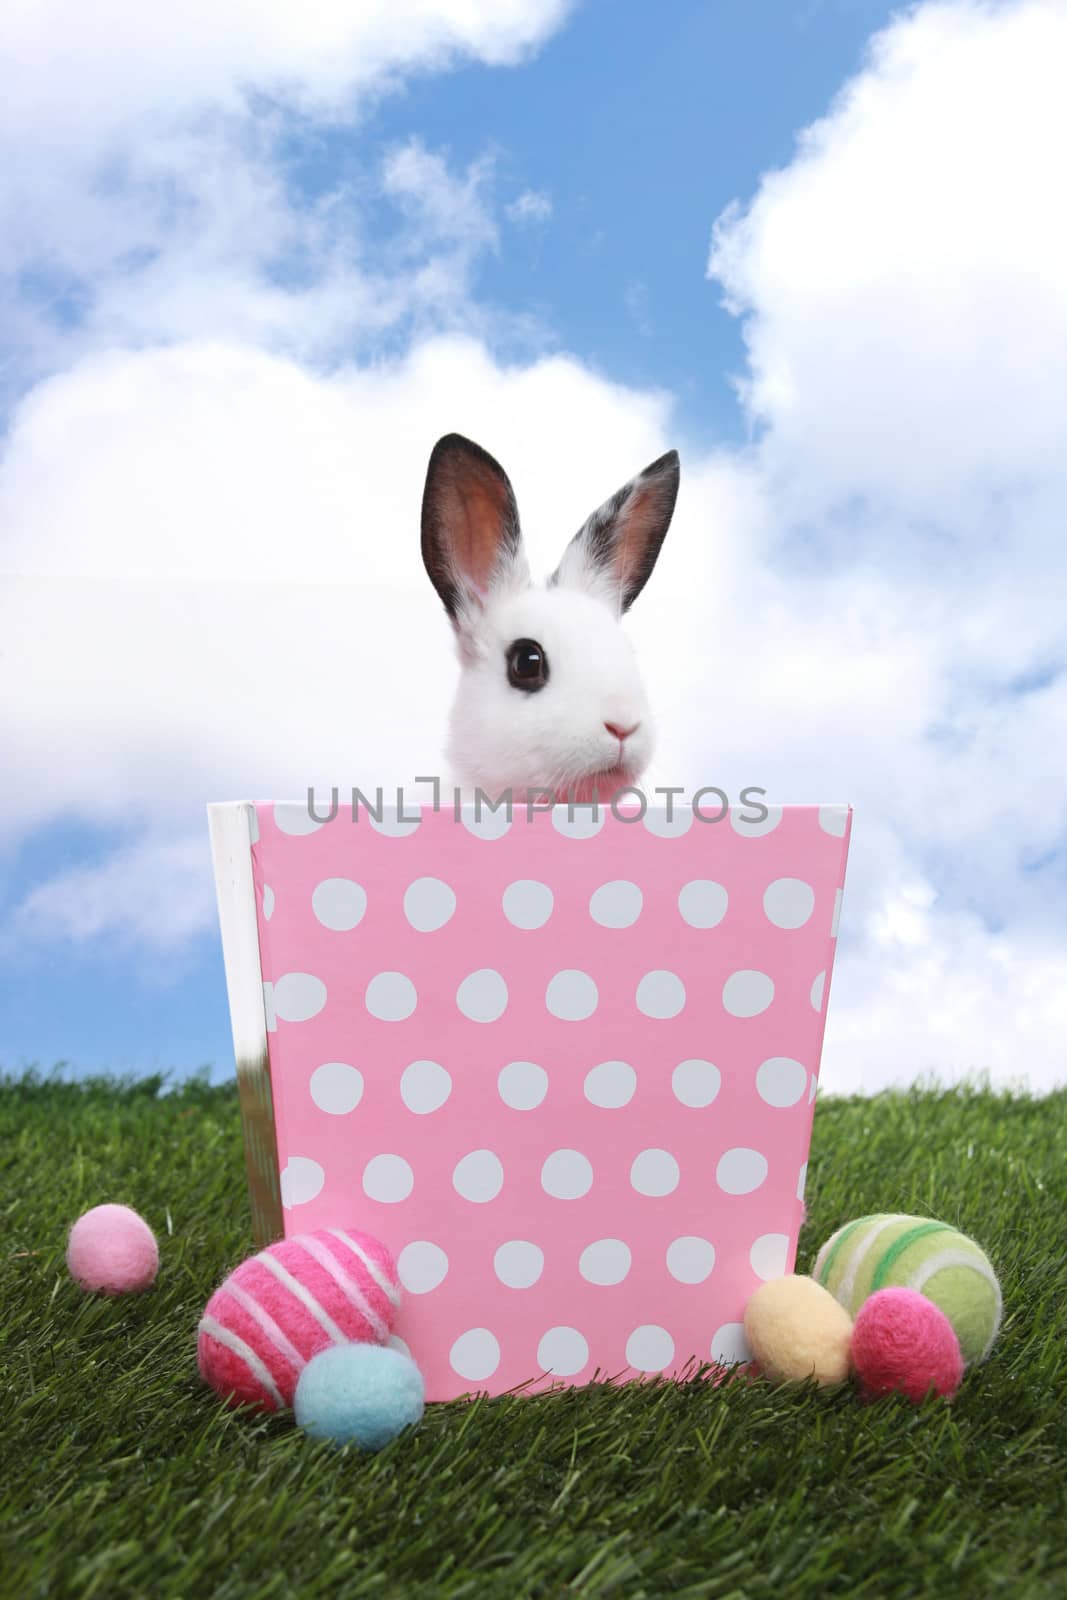 Young Adorable Little Bunny Rabbit by tobkatrina